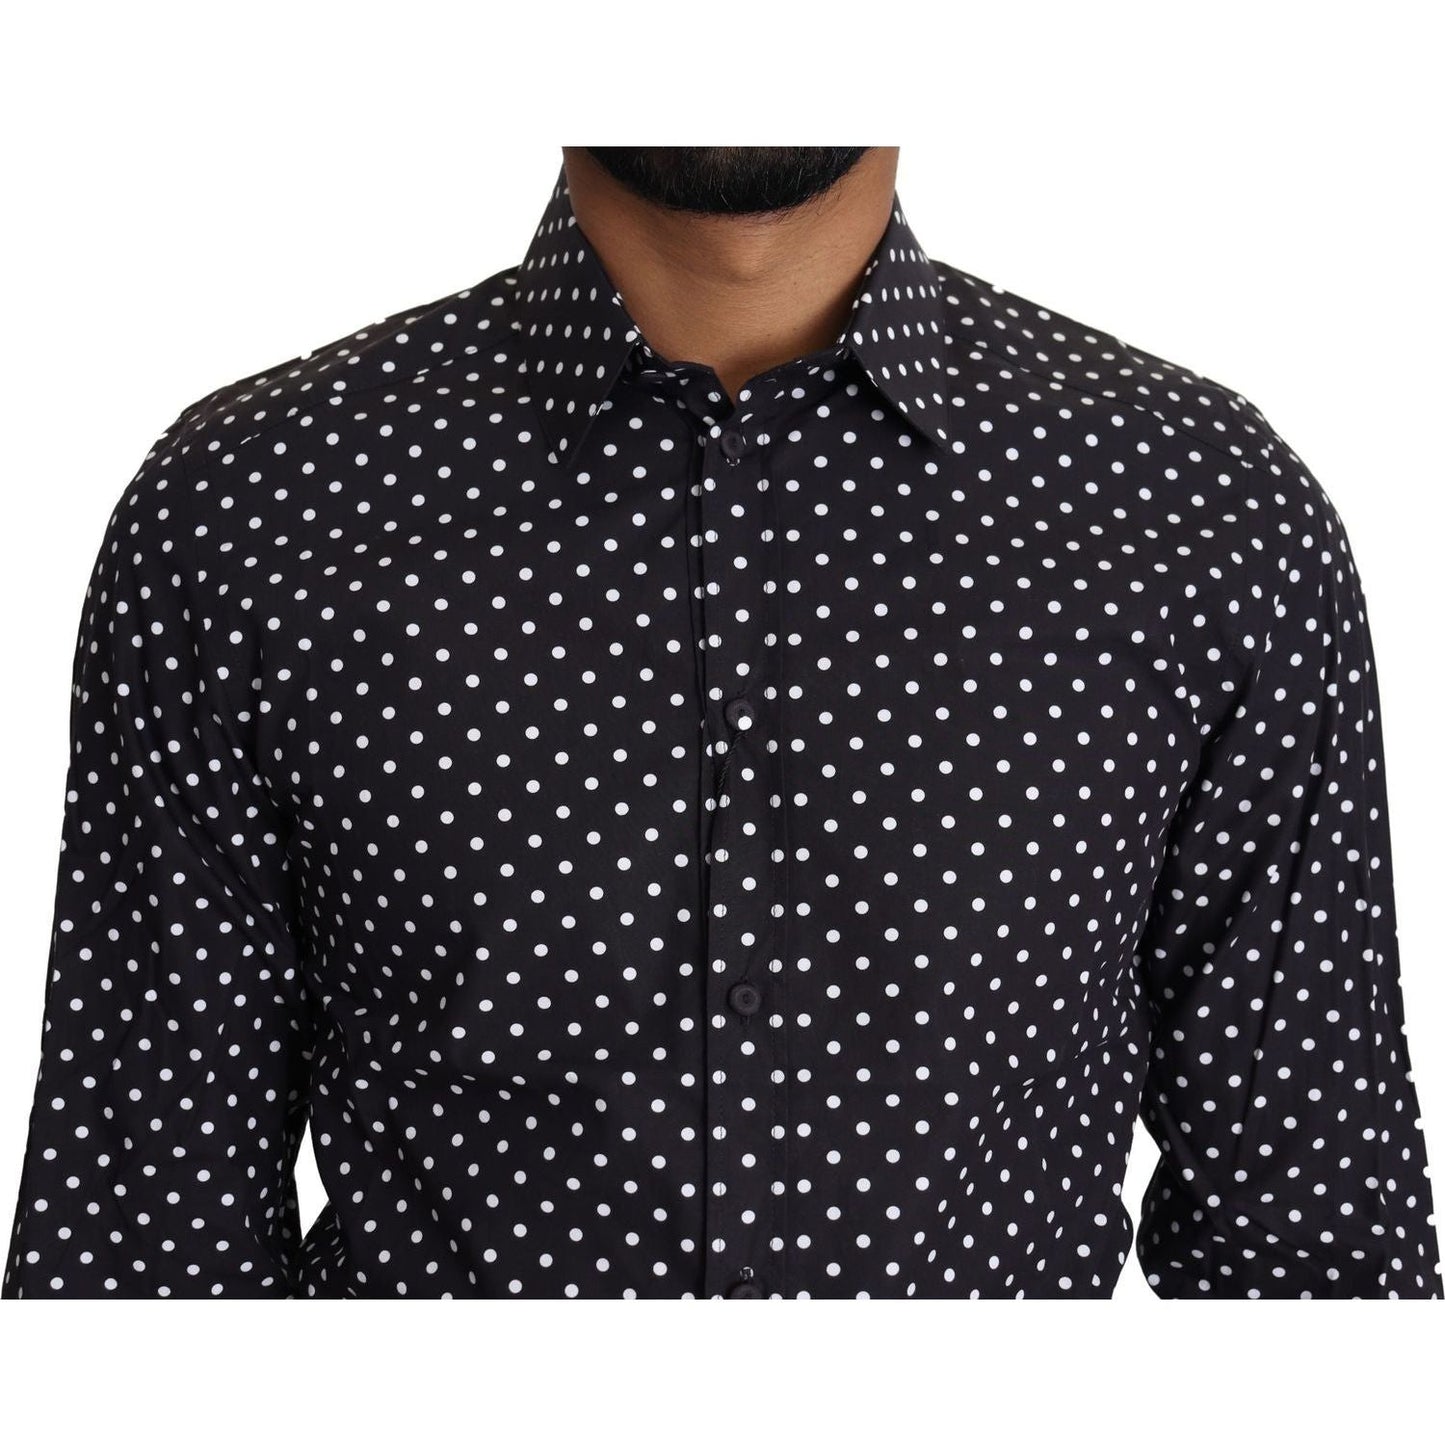 Dolce & Gabbana Elegant Polka Dot Men's Long Sleeve Shirt black-white-polka-dots-casual-shirt